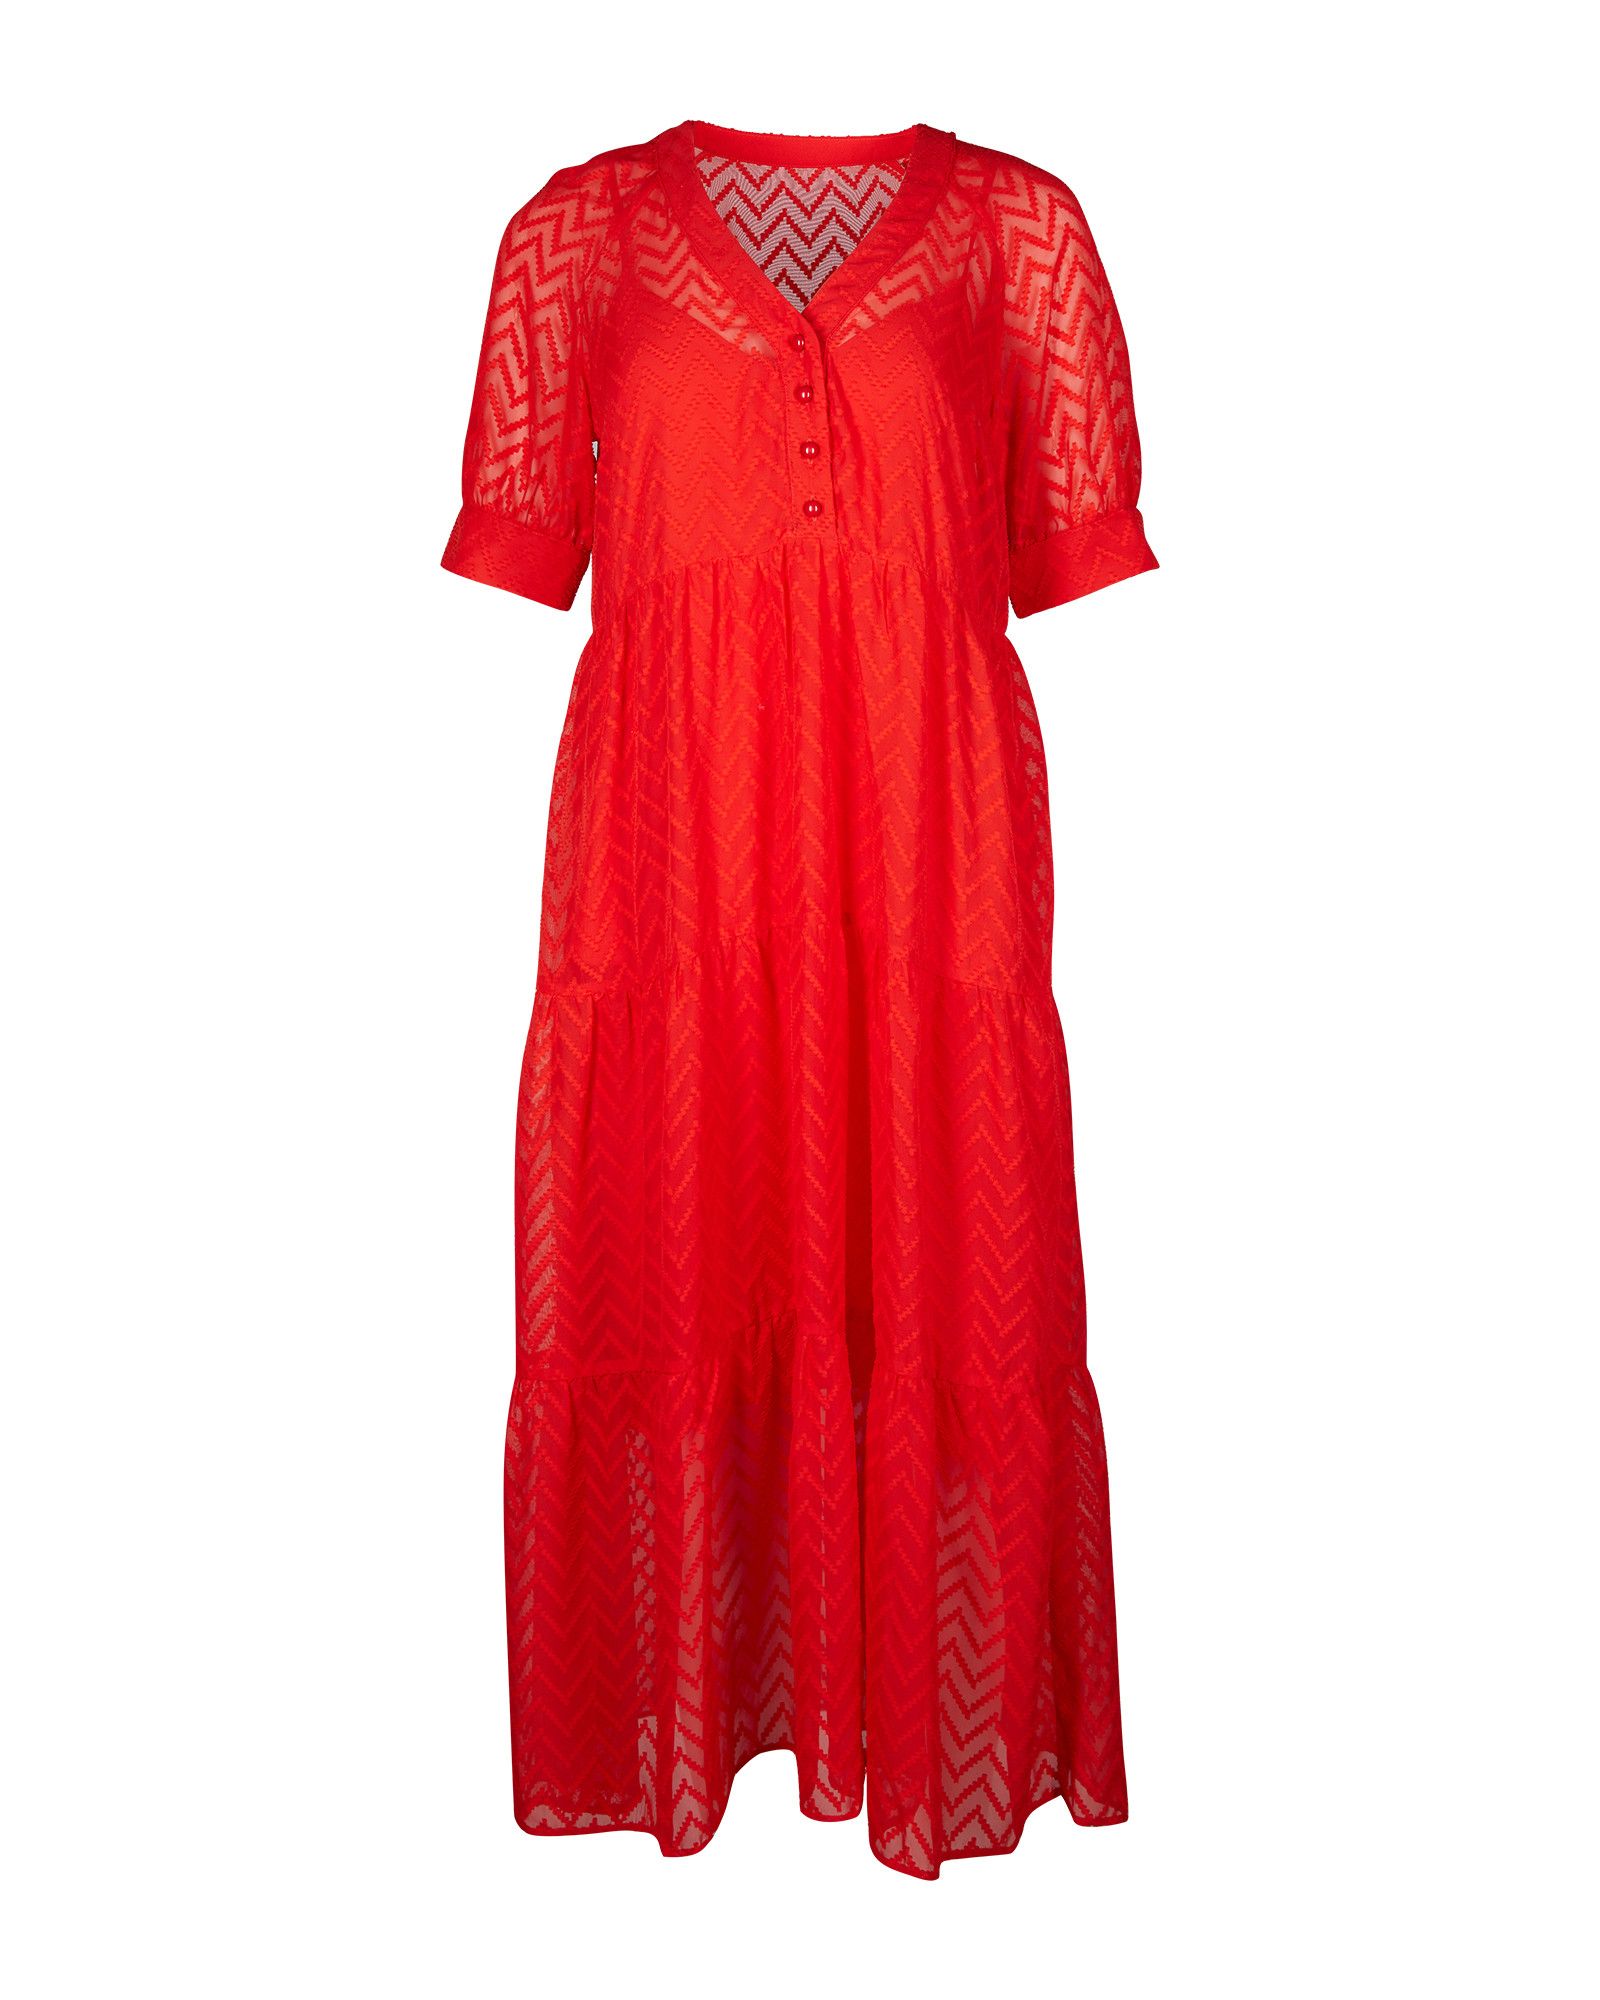 Textured Chevron Red Midi Shirt Dress ...